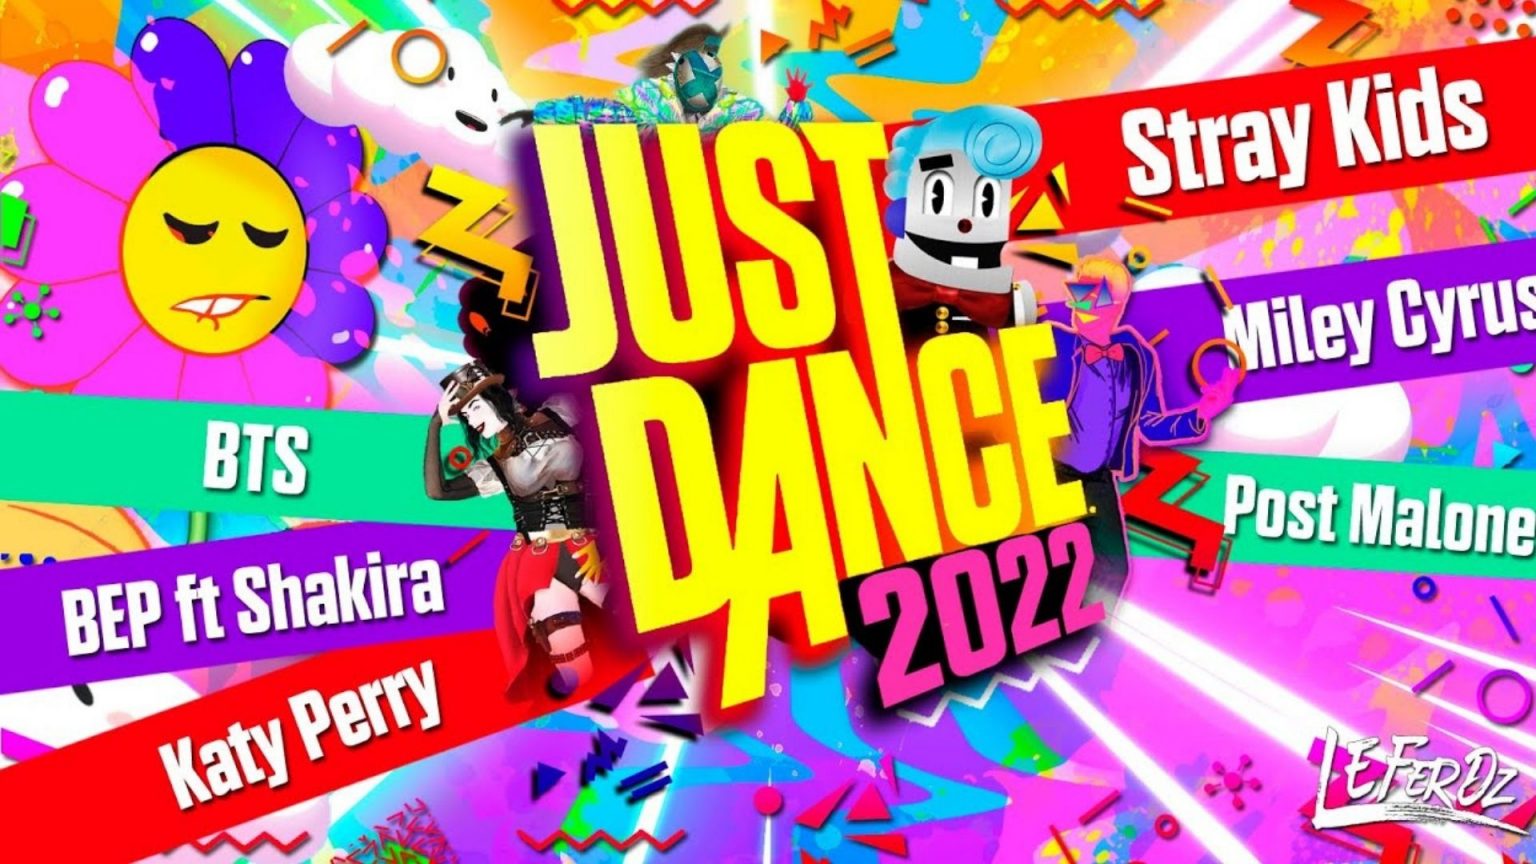 Just Dance 2022 Trailer Features Todrick Hall